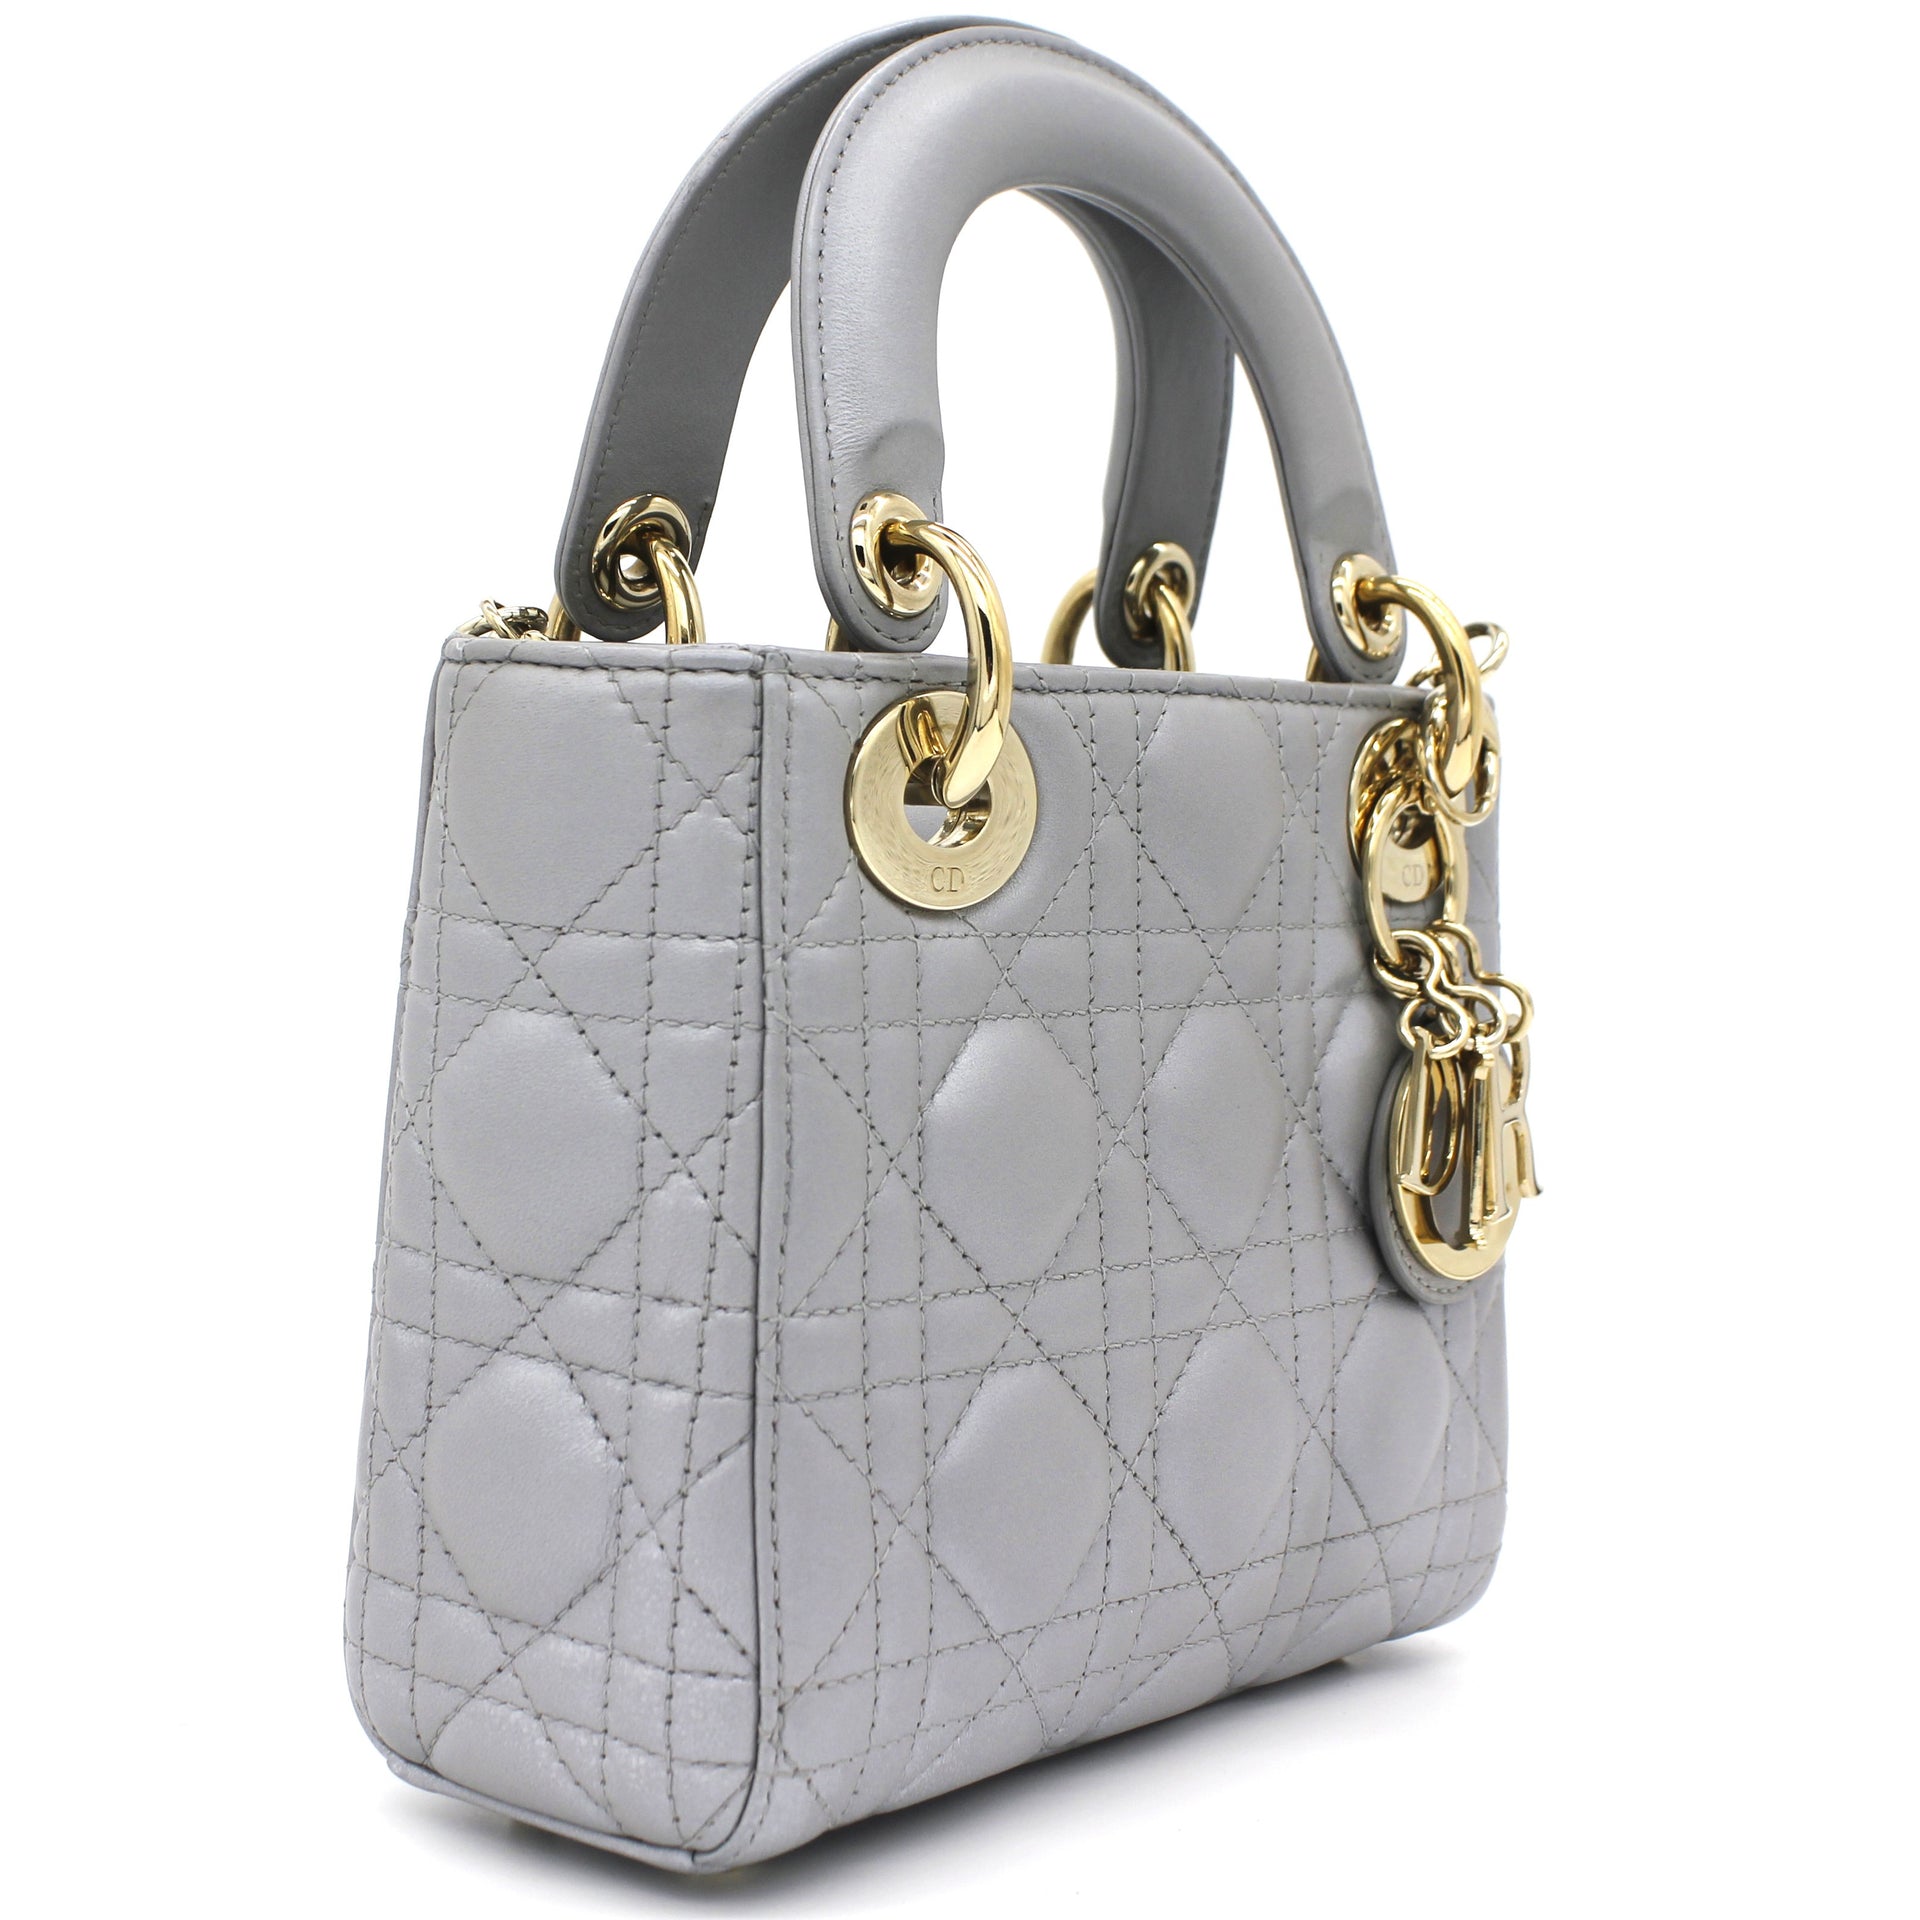 Mini Lady Dior Bag with Chain in Grey Pearly Lambskin